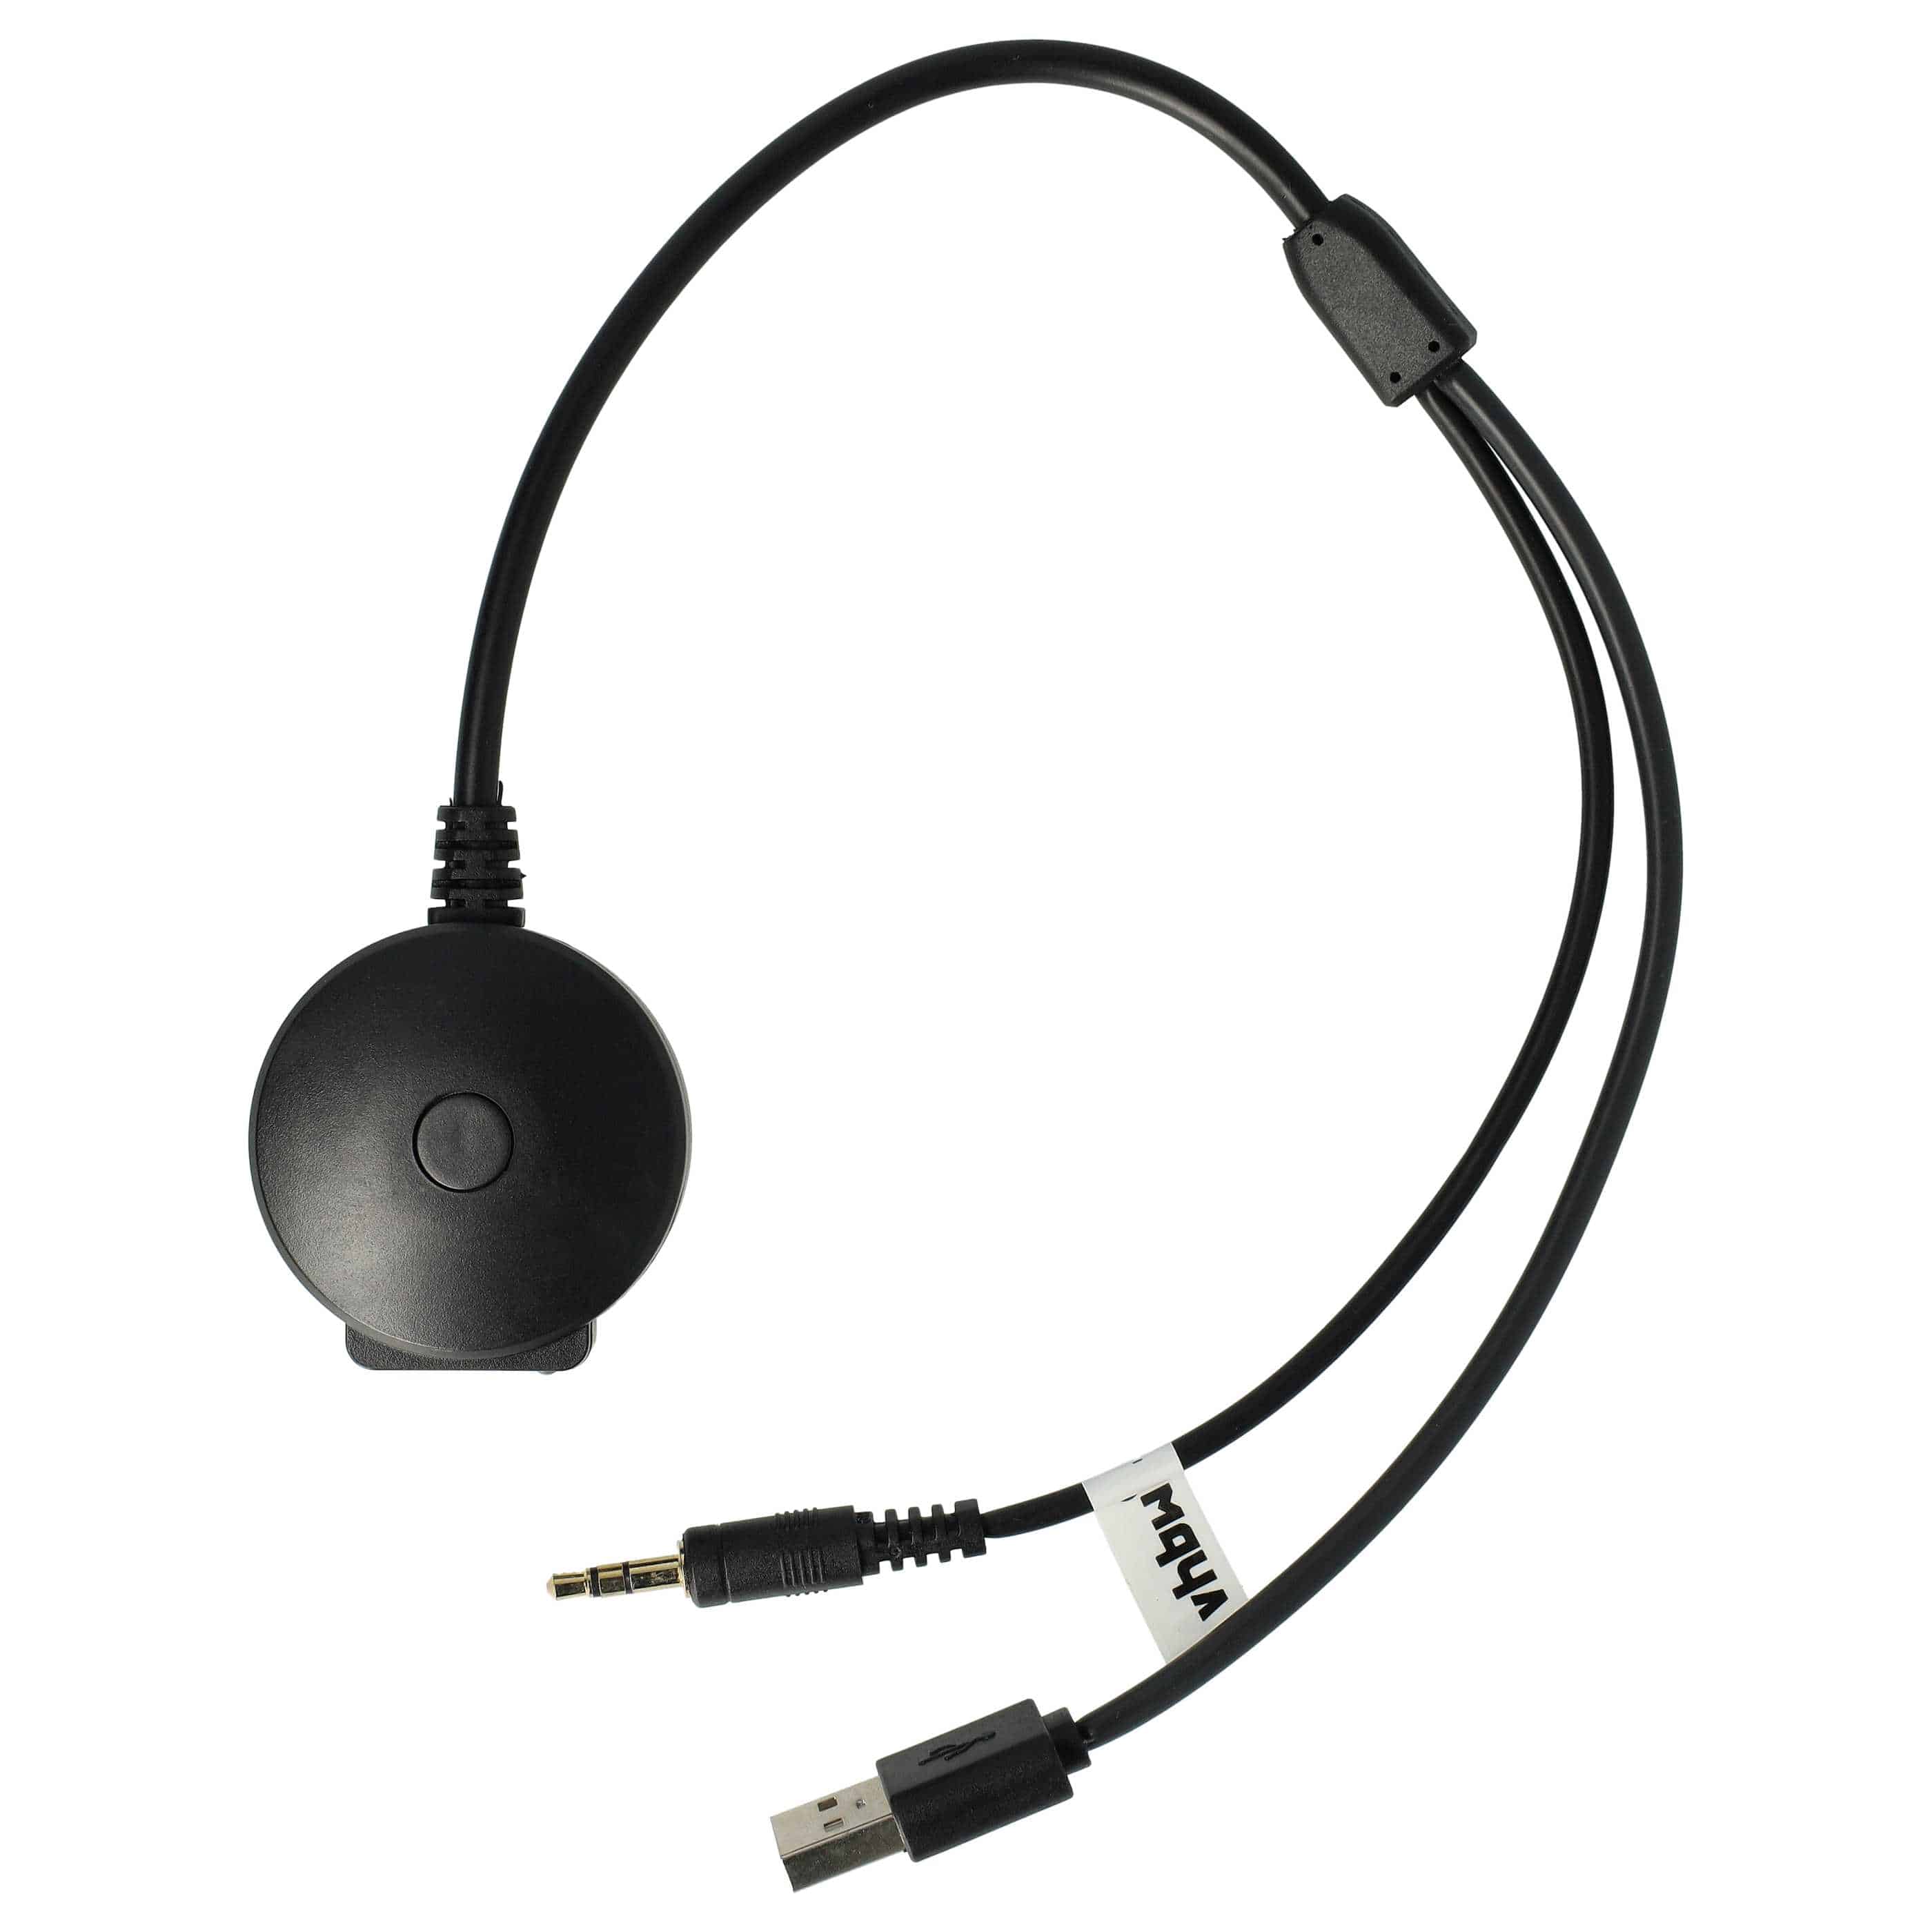 AUX Audio Adapter Cable for MINI, BMW R56 Car Radio etc. - USB, Bluetooth